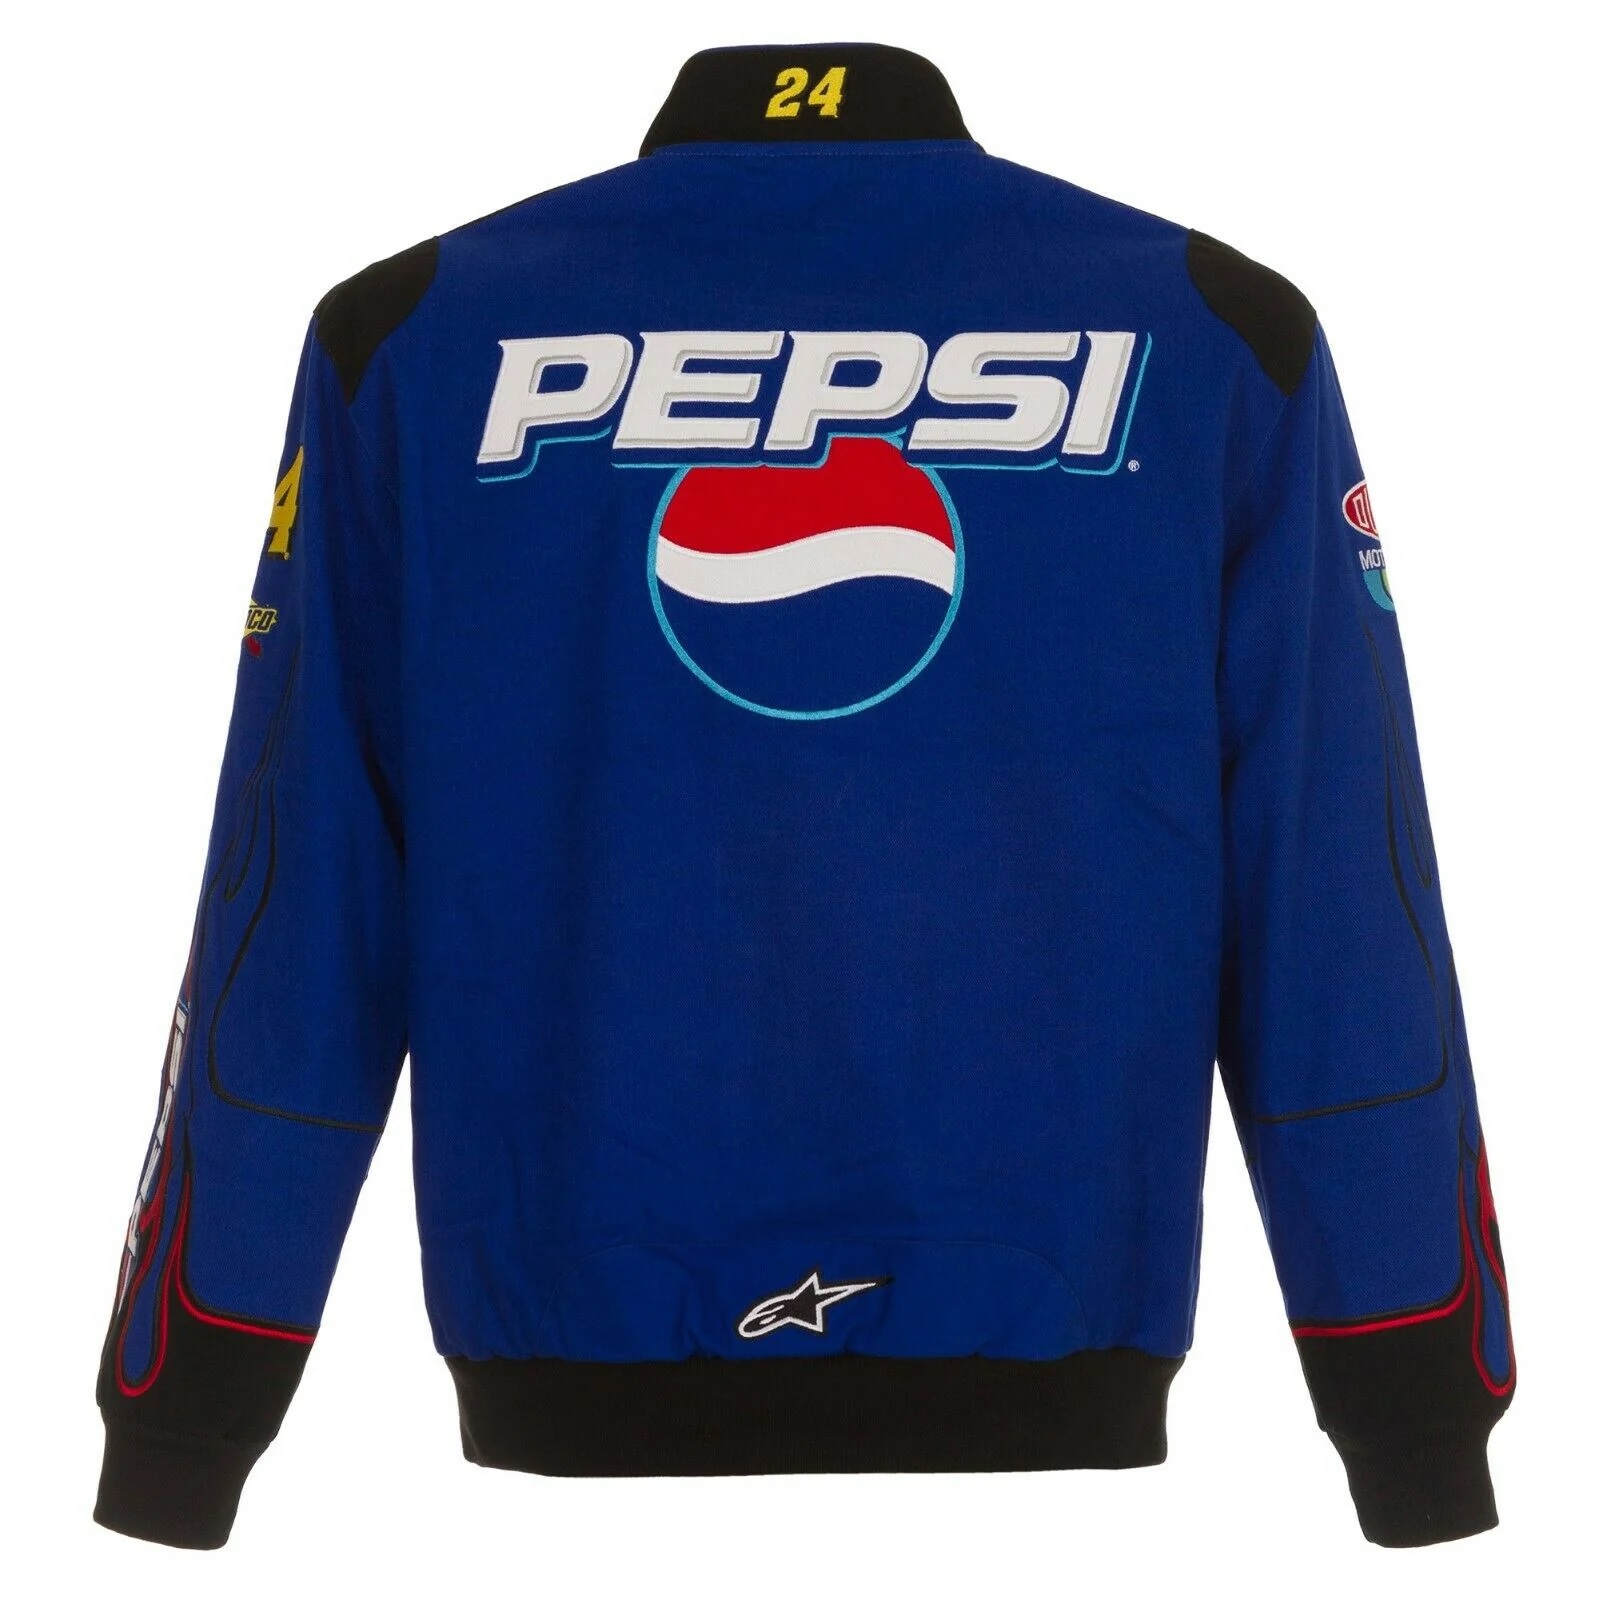 Jeff Gordon Pepsi Royal Jacket